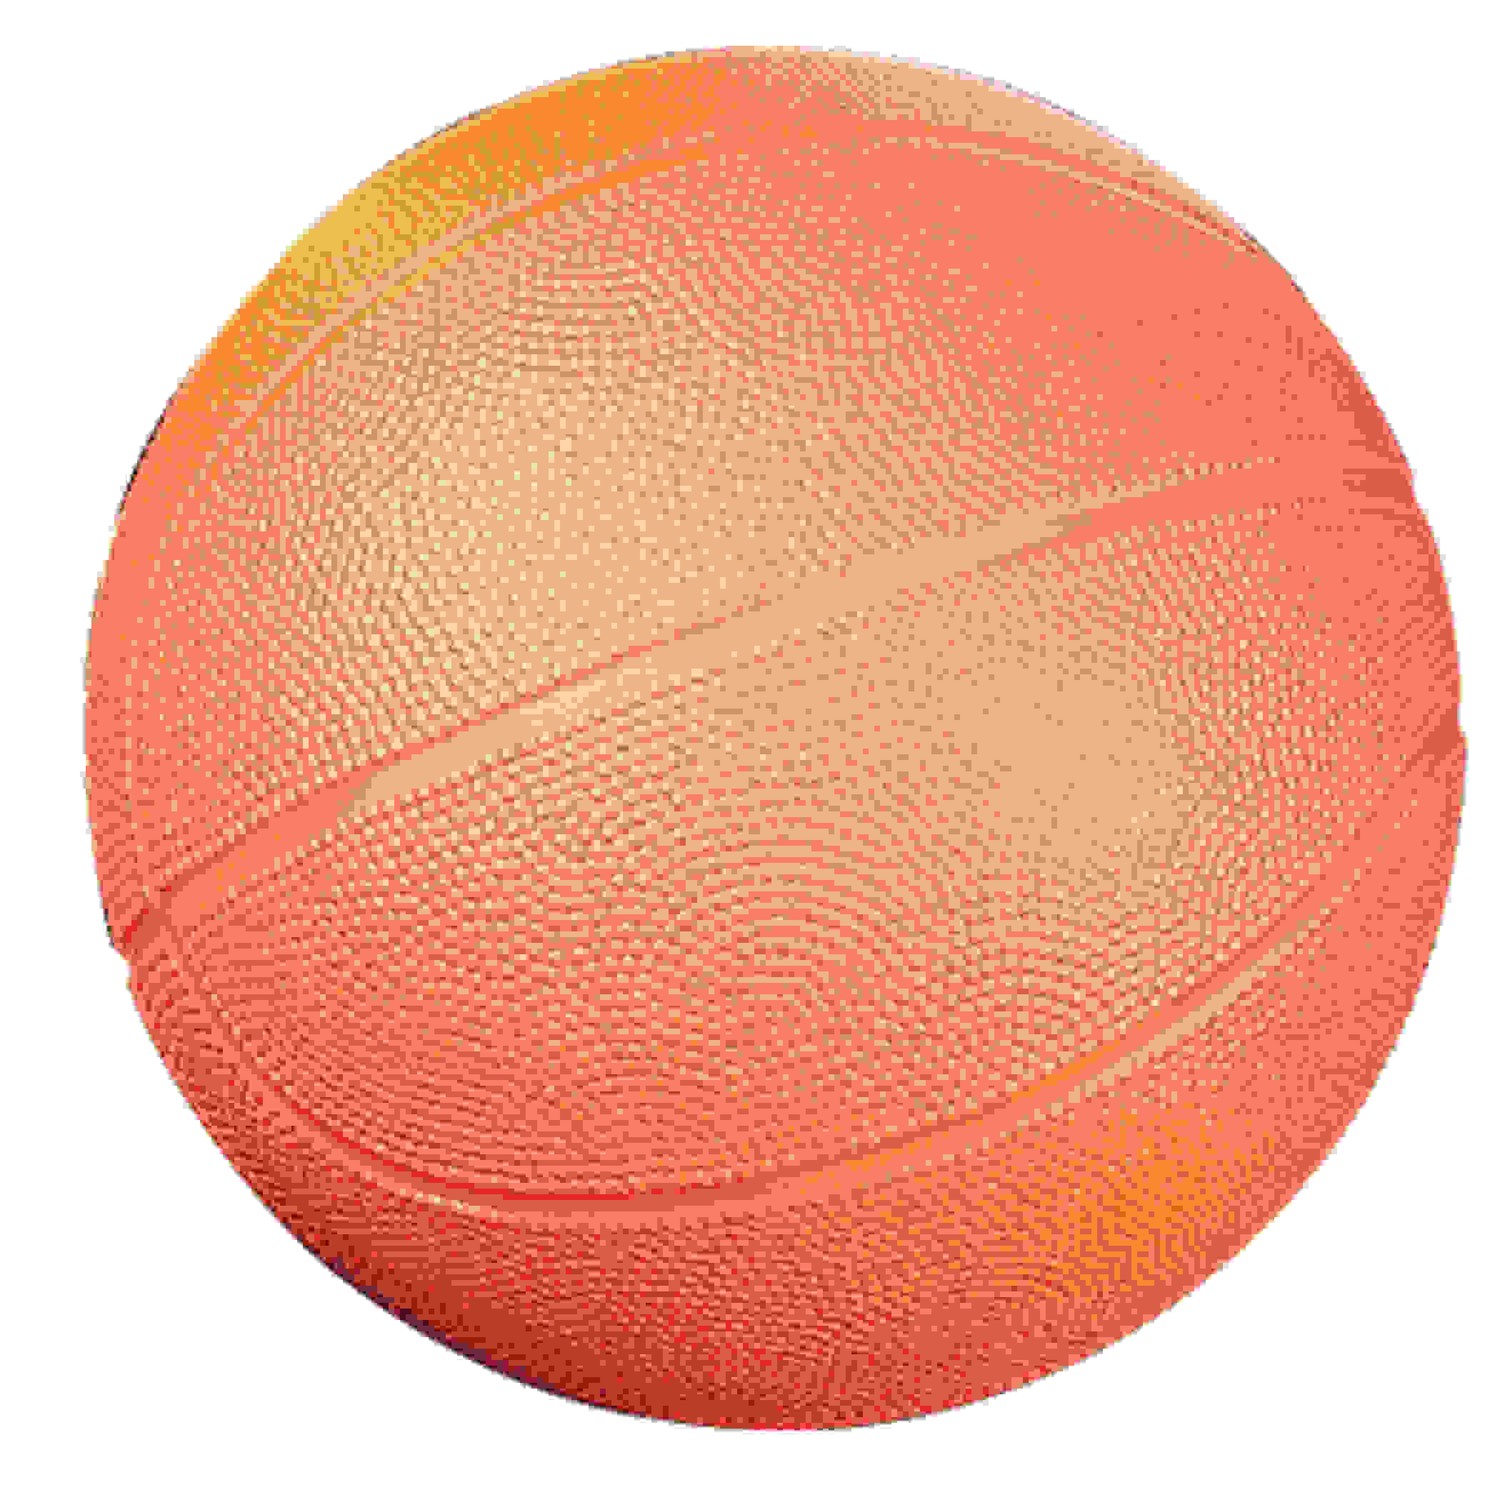 Coated High Density Foam Basketball, Size 3